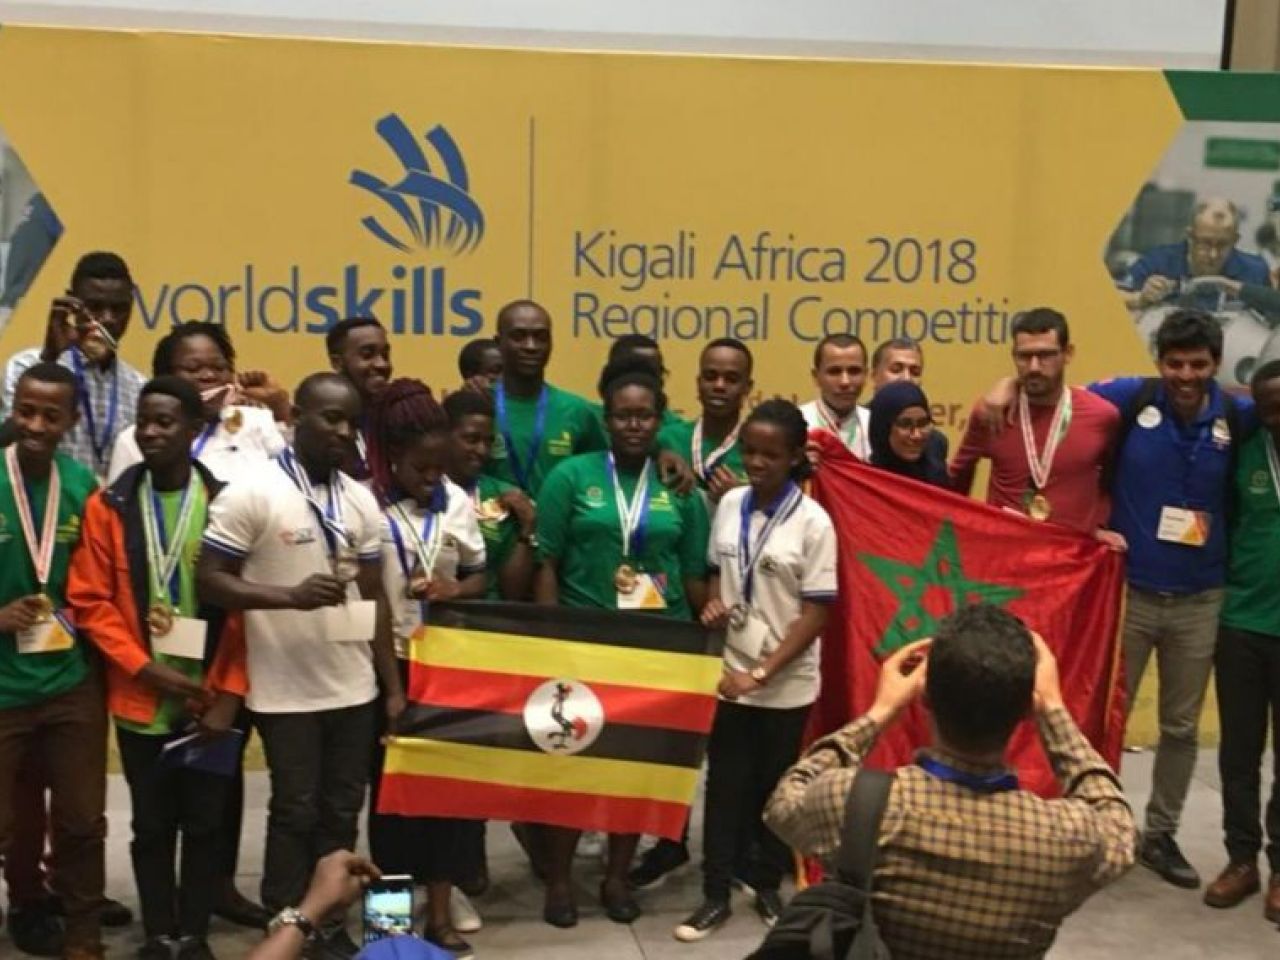 WorldSkills Kigali Africa 2018 Regional Competition - first continental platform for Africa